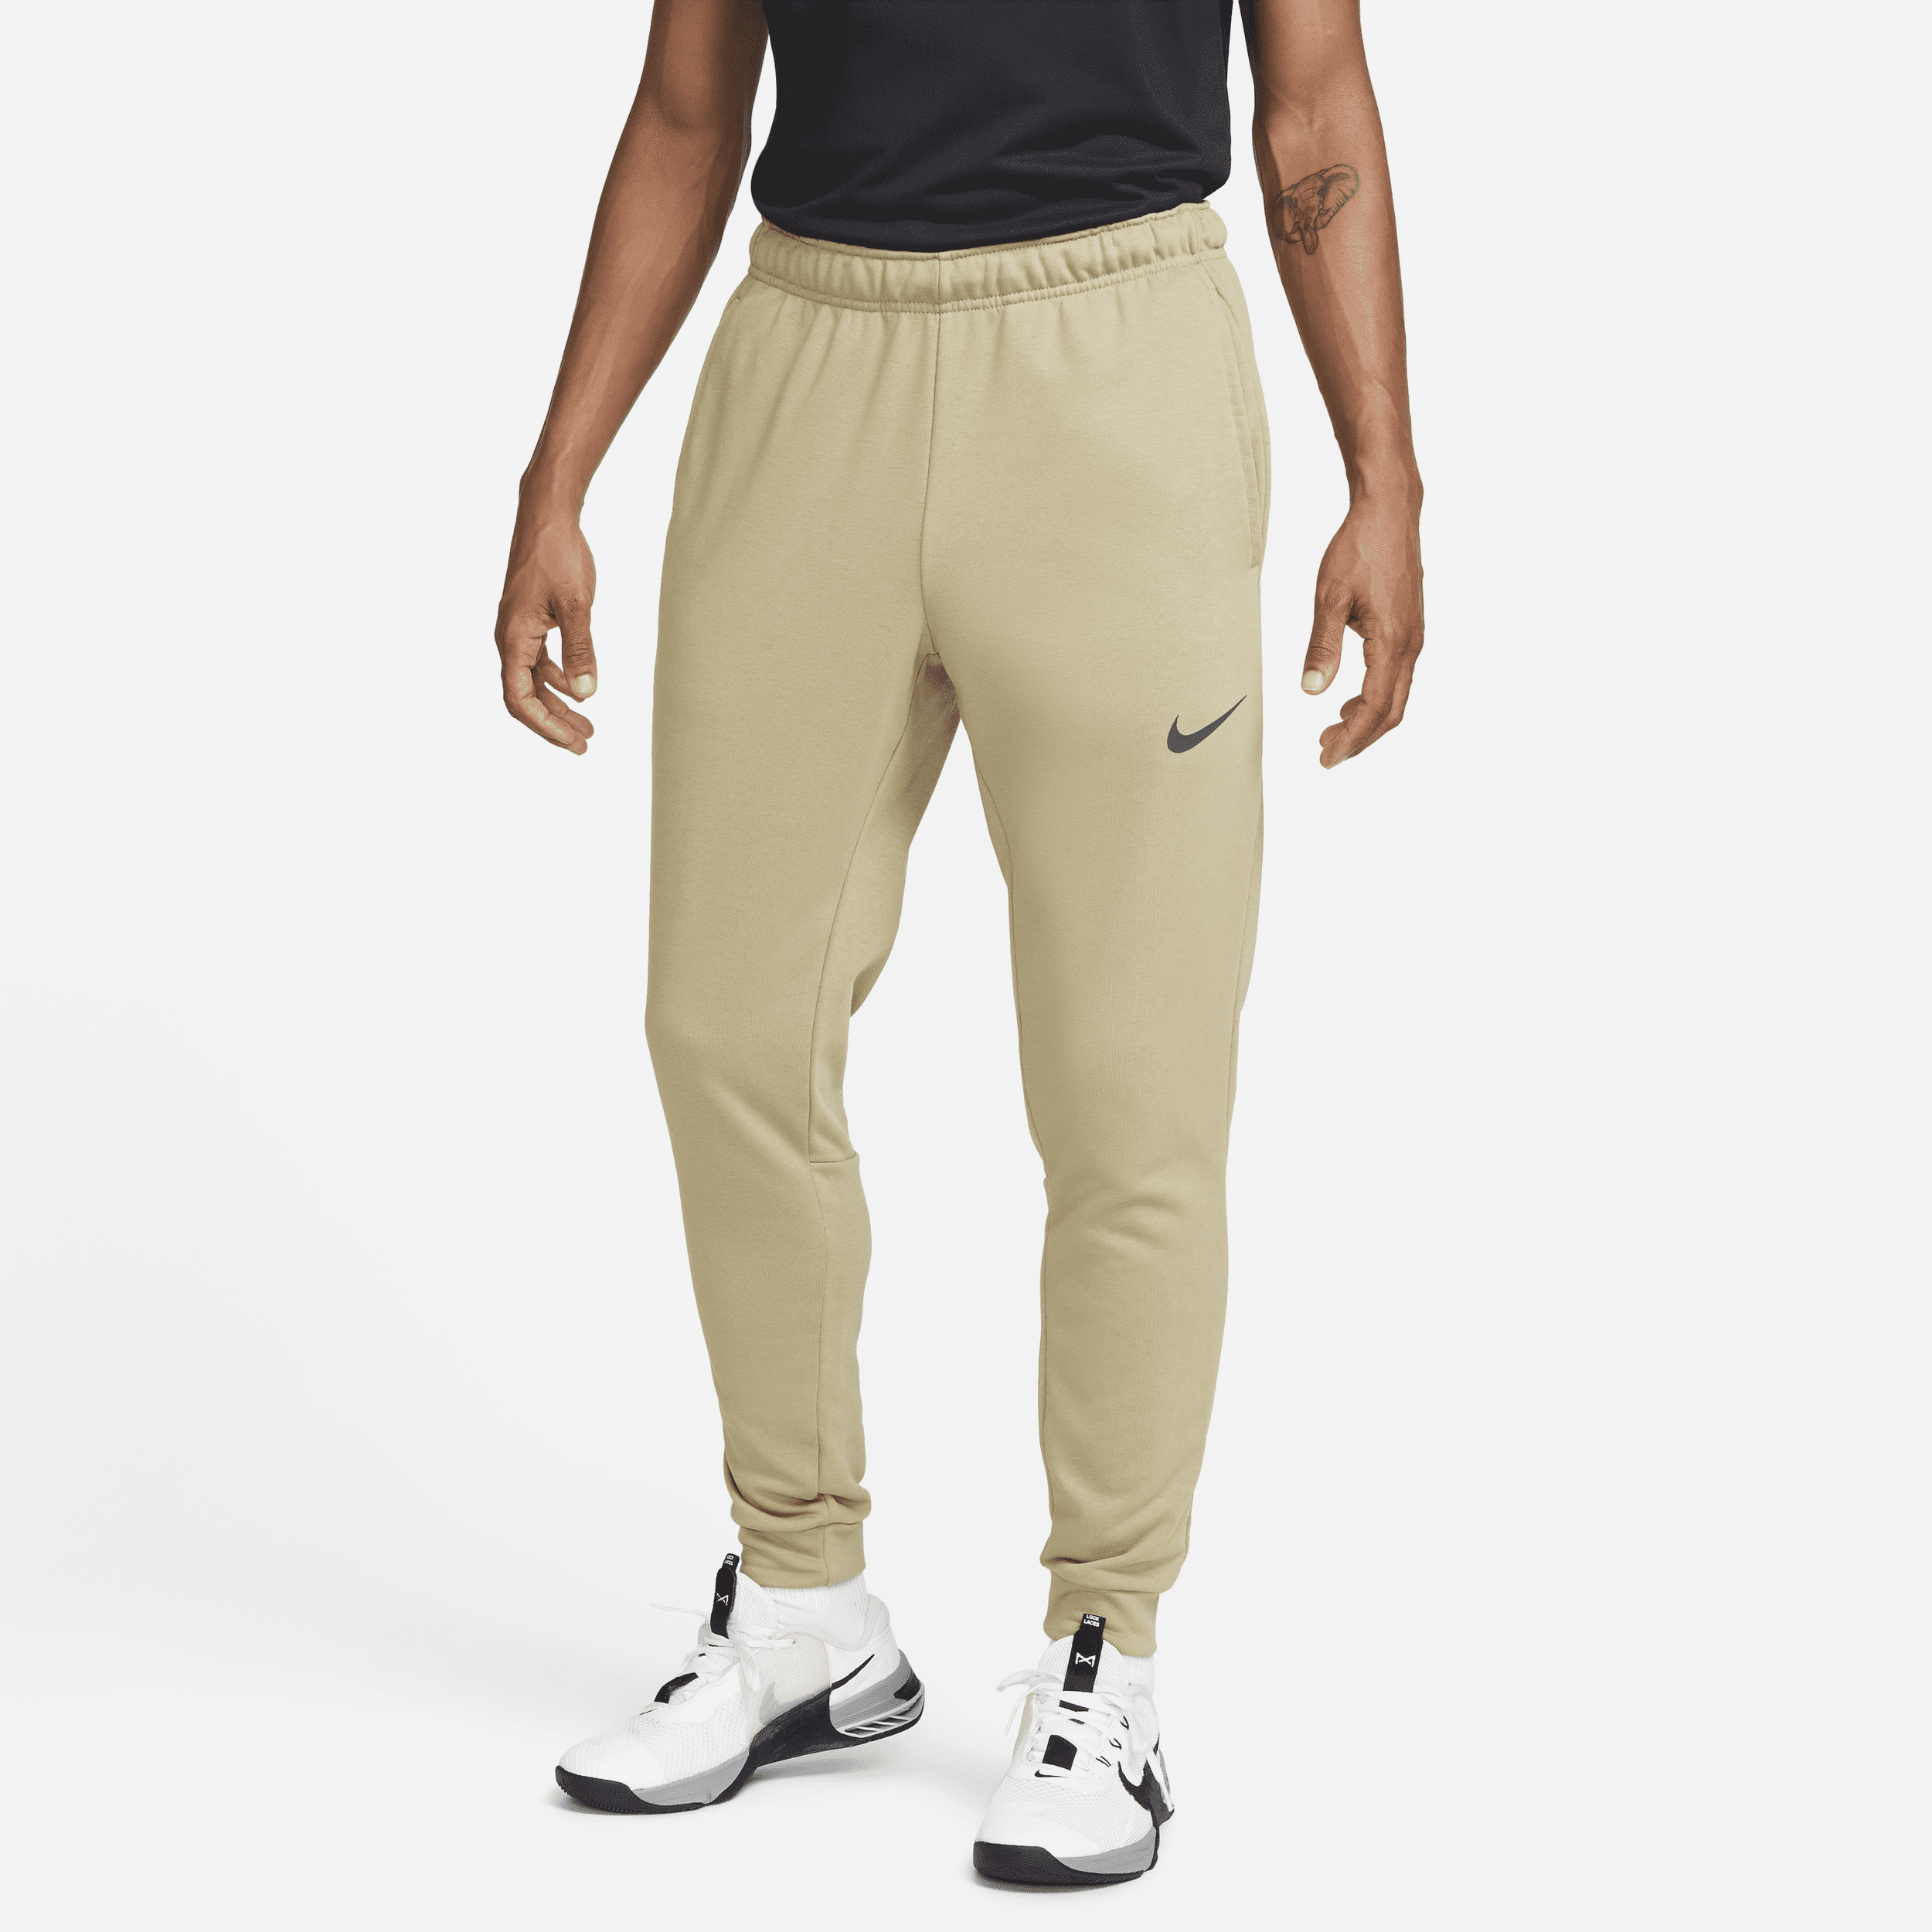 Nike Dry Dri-FIT-fitnessbukser i fleece til mænd - brun